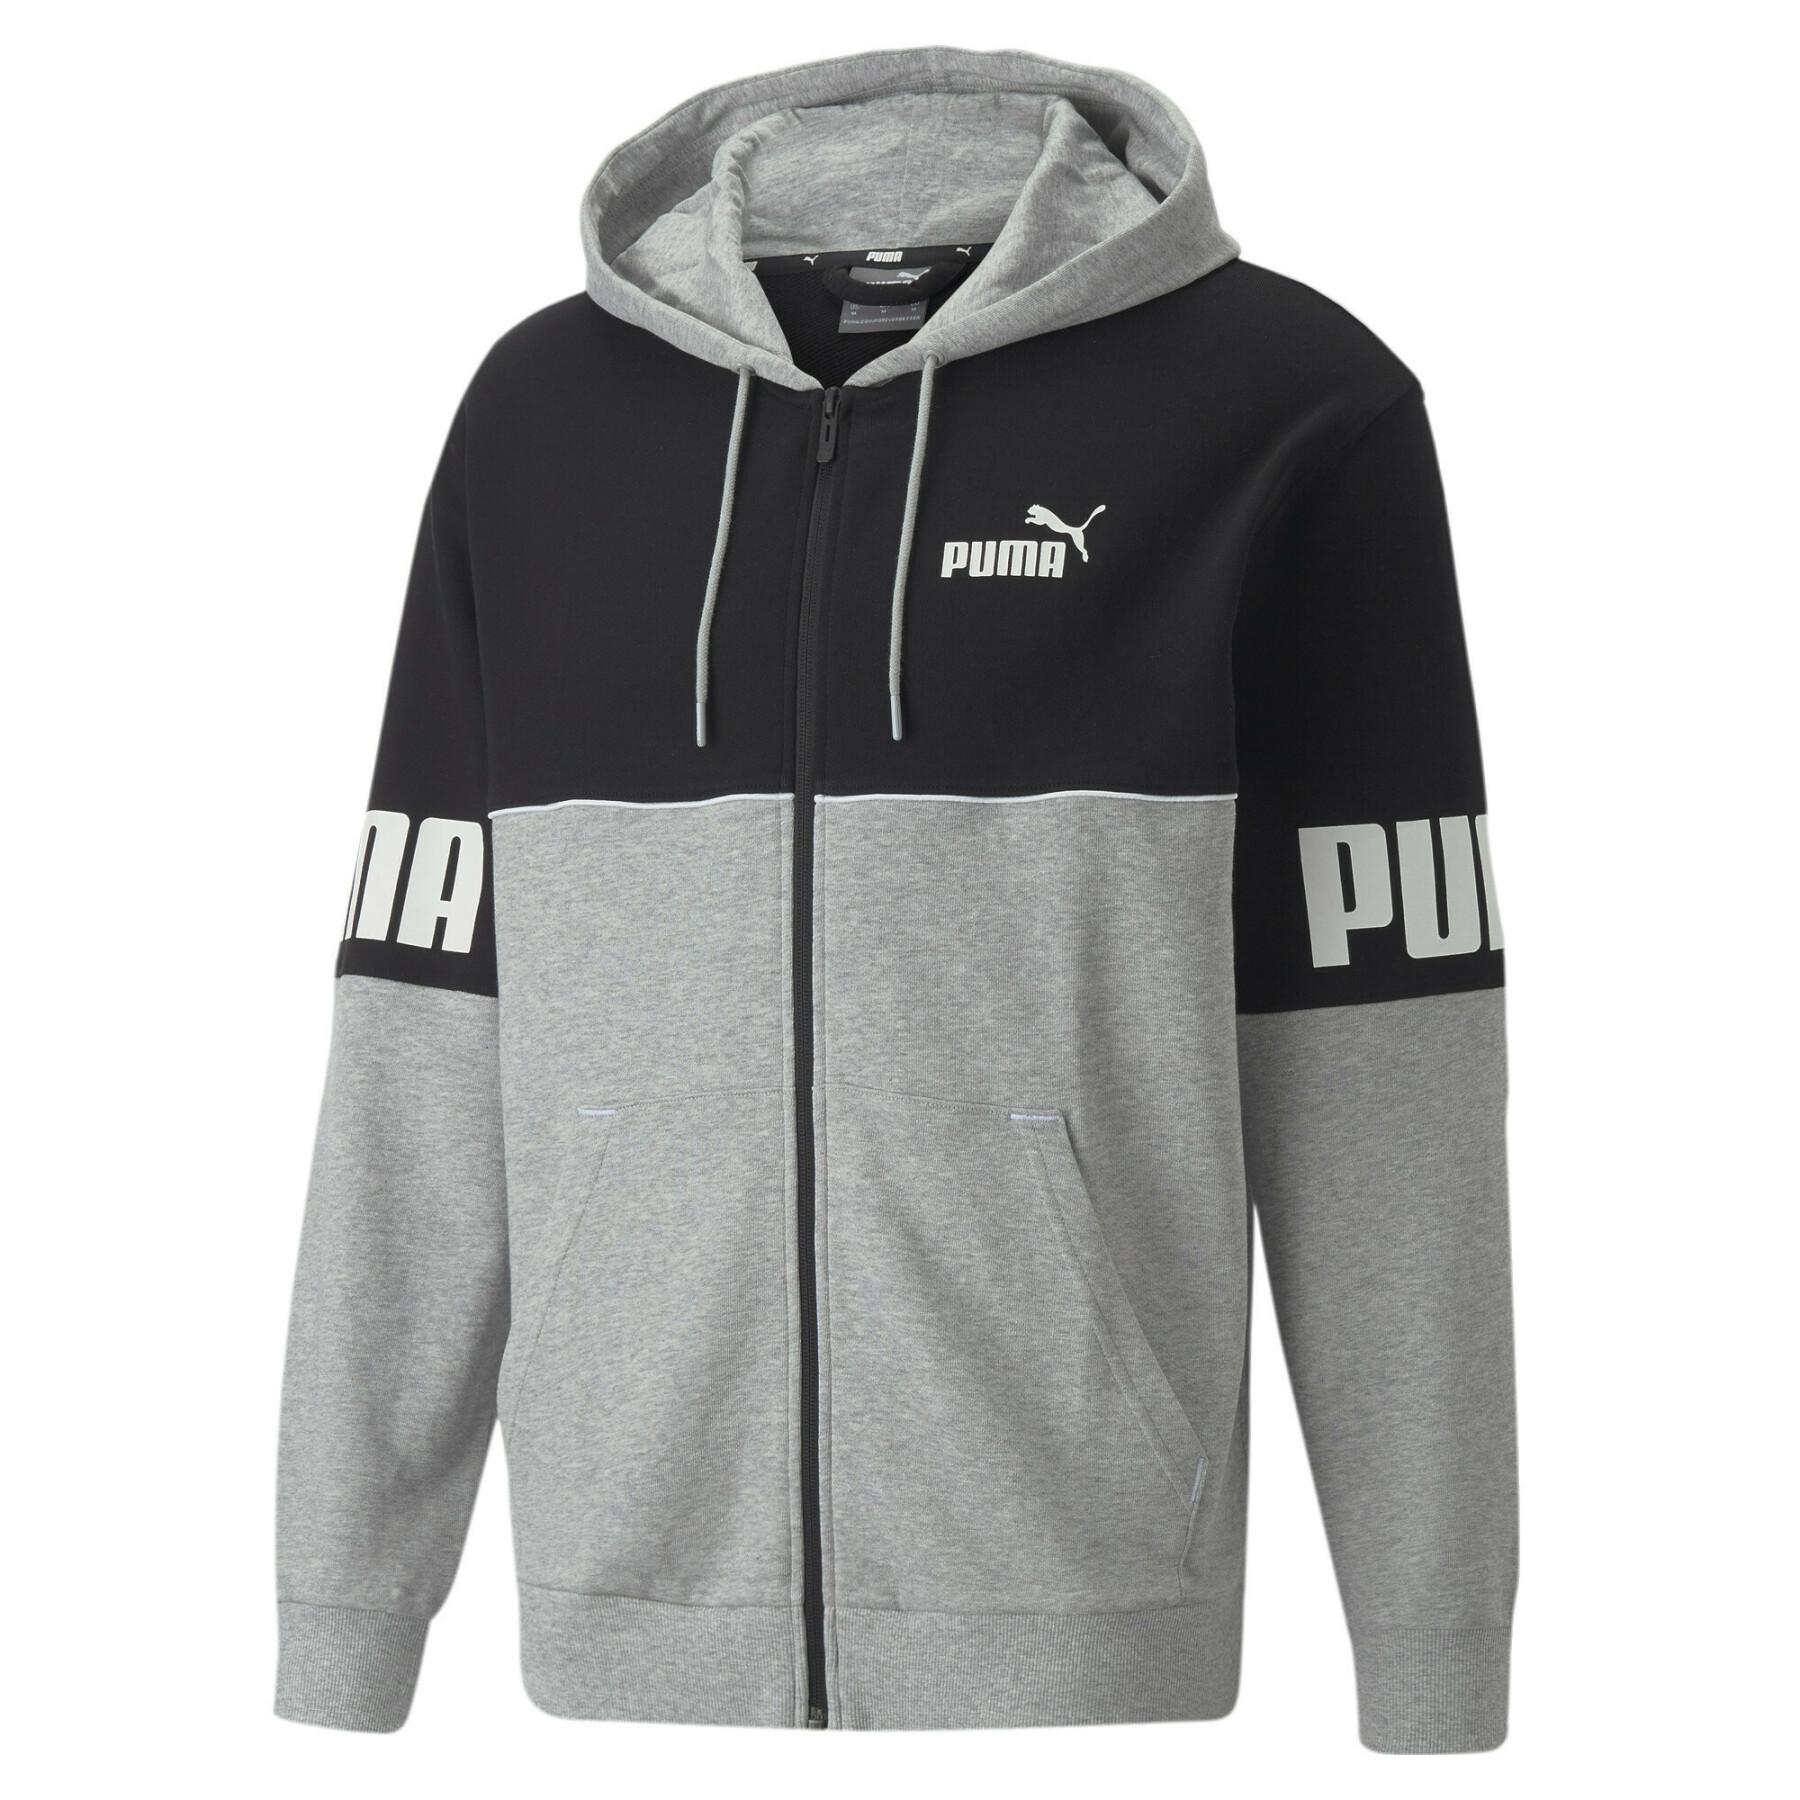 Full zip Power Hoodies - Colorblock Puma most Sweats & hoodie trendy The Puma - TR - Sweats